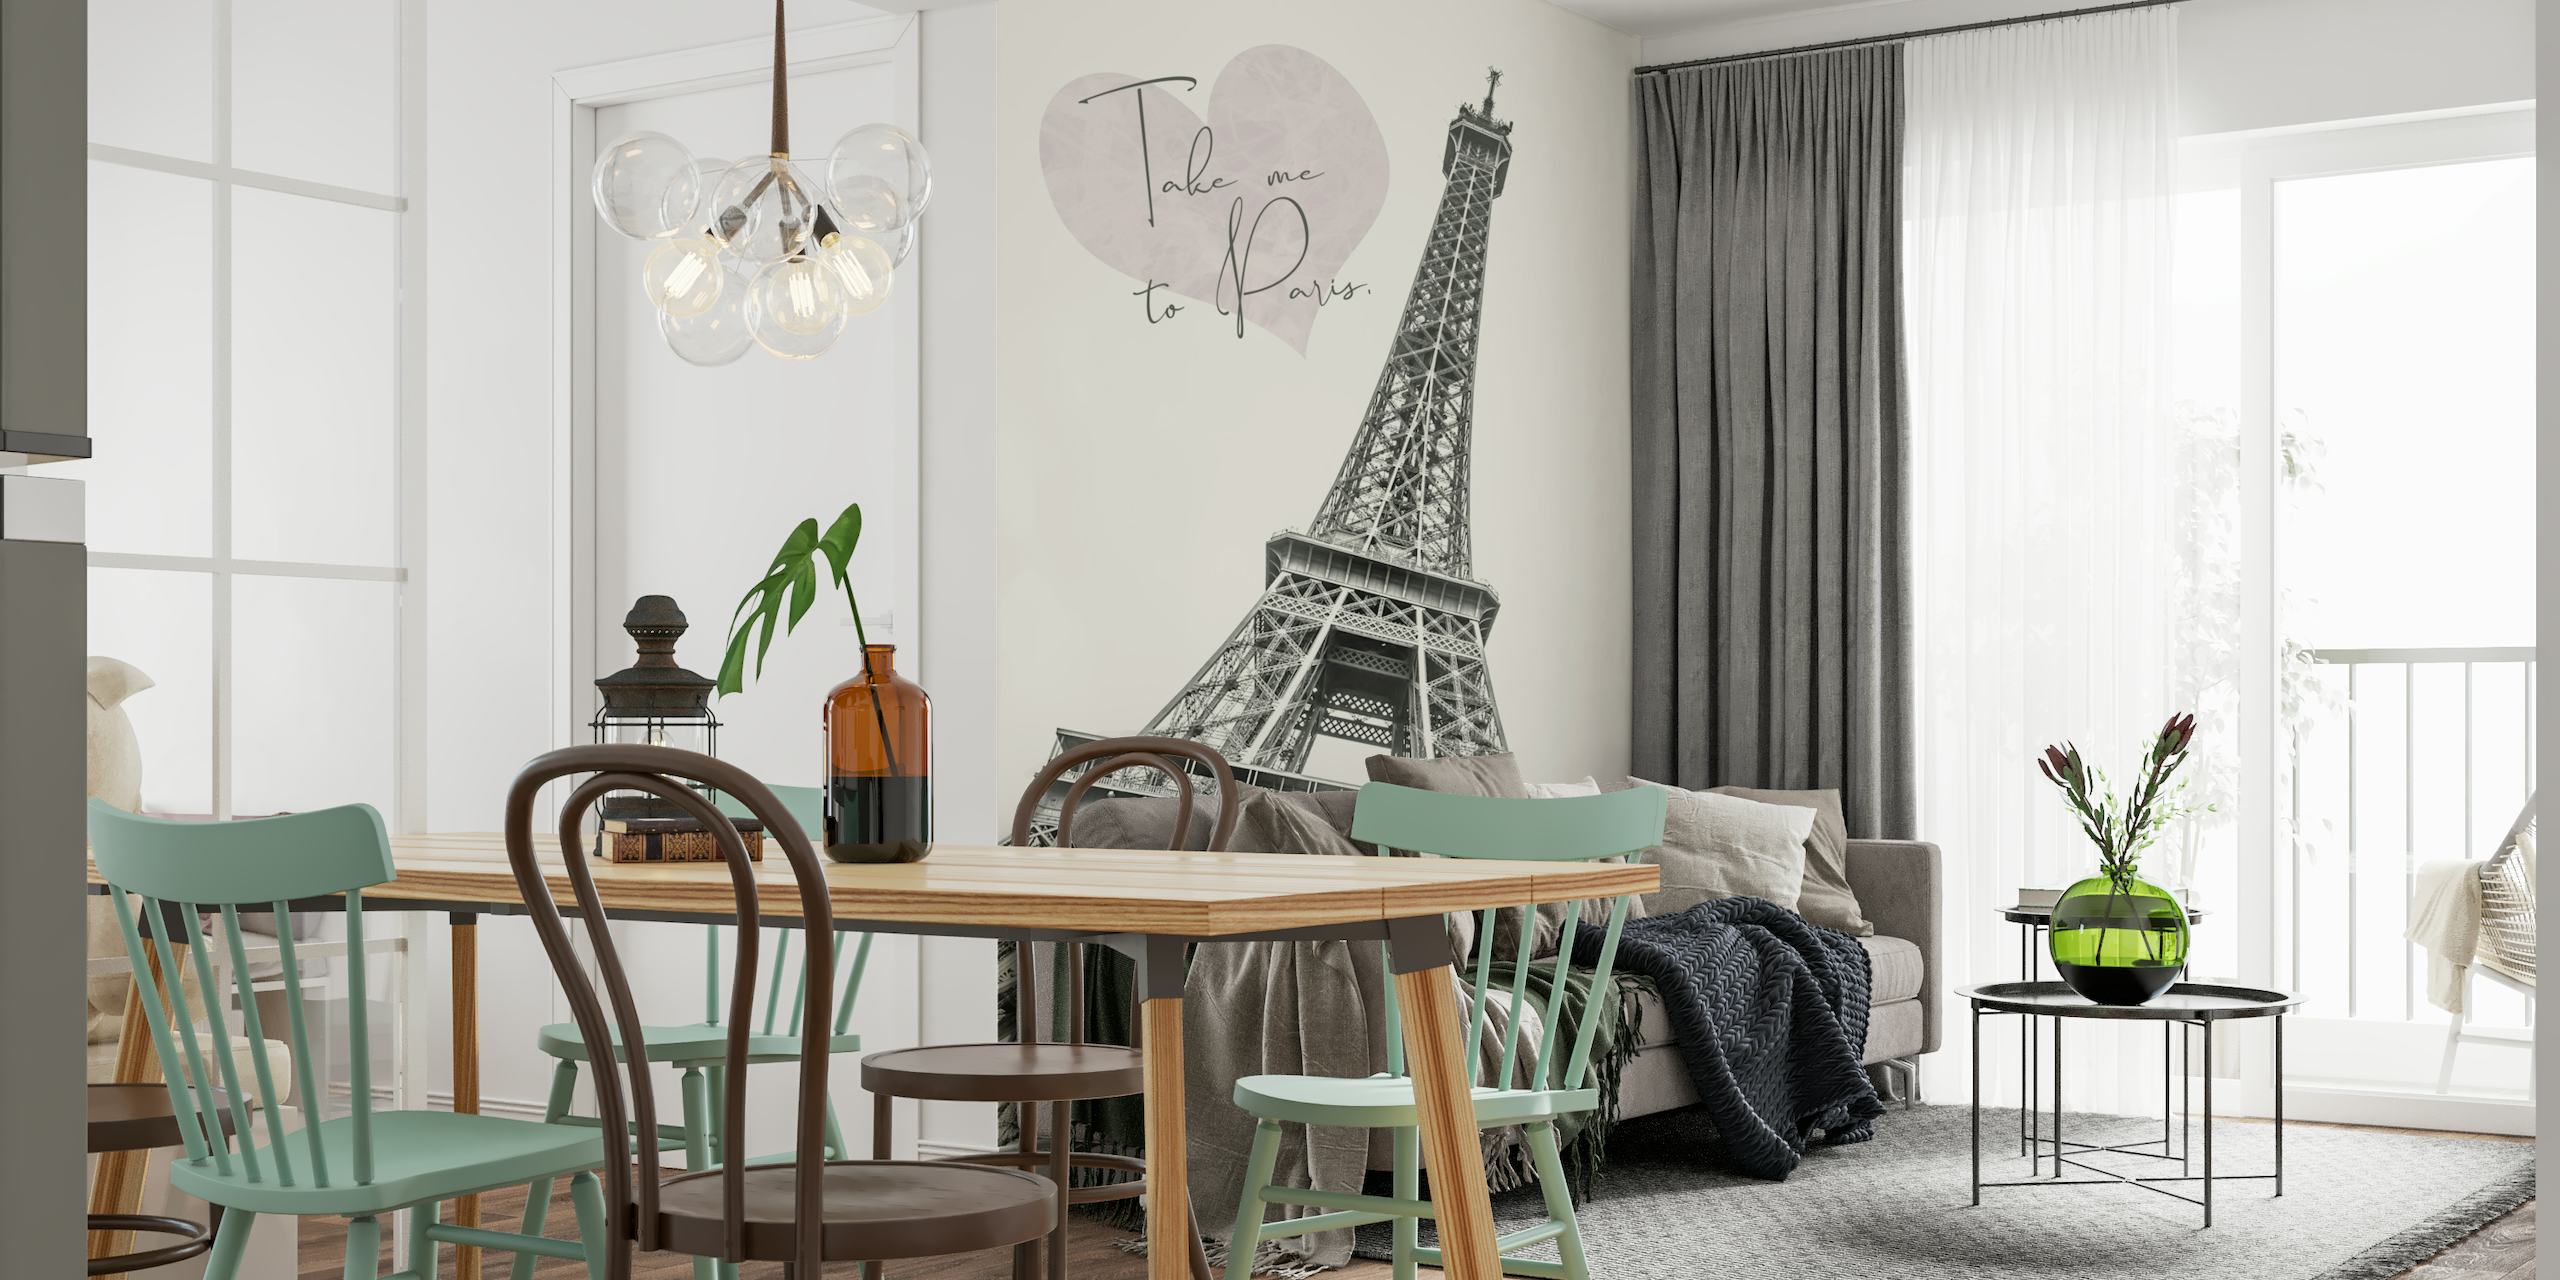 Romantic Eiffel Tower - Take me to Paris papel pintado